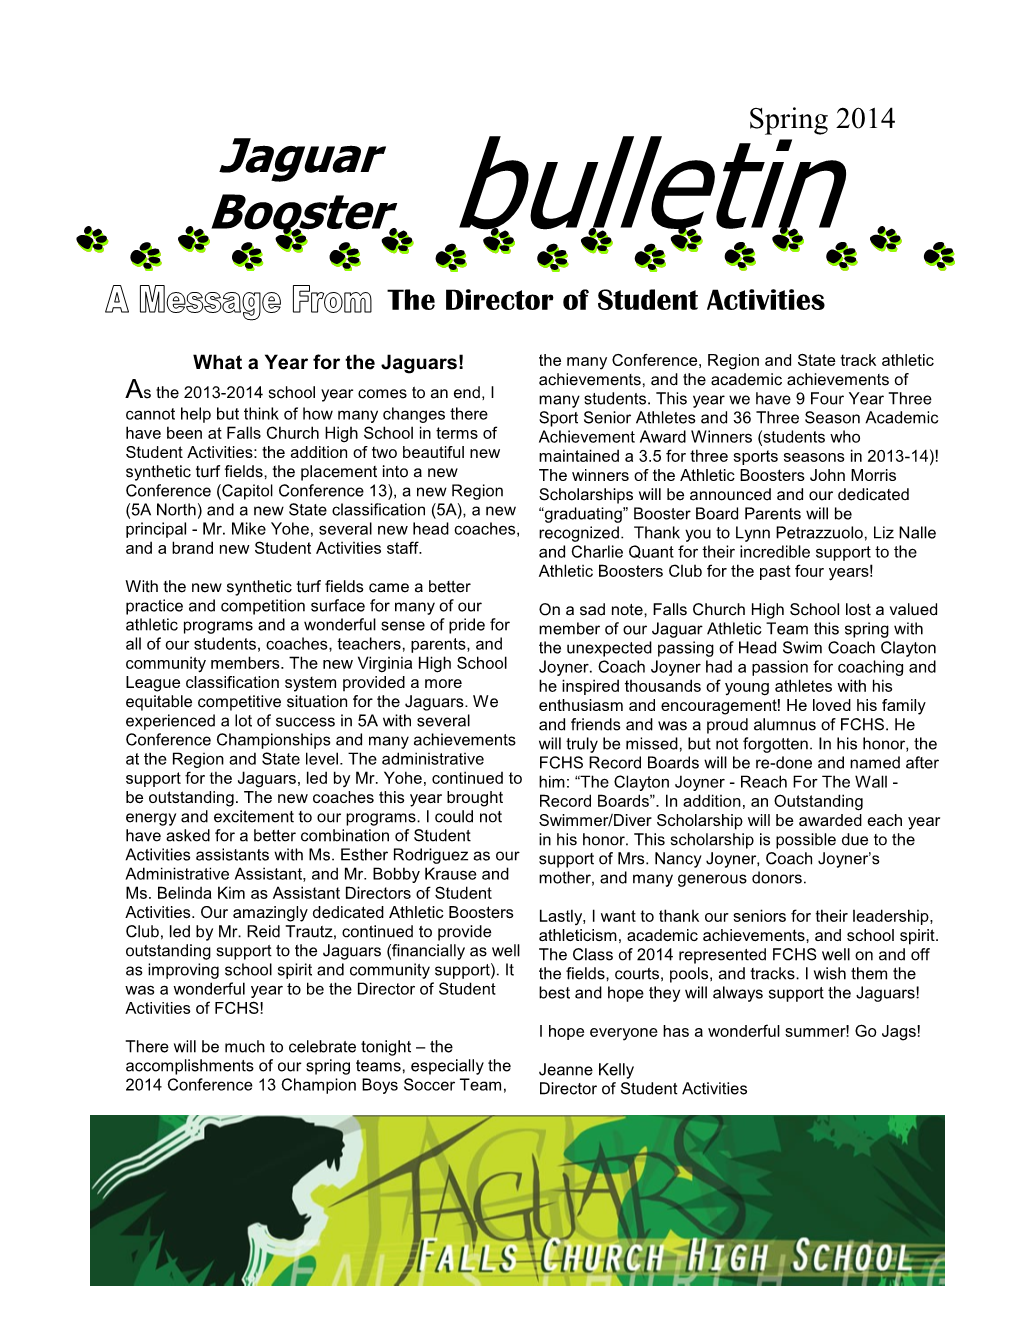 Jaguar Booster Bulletin